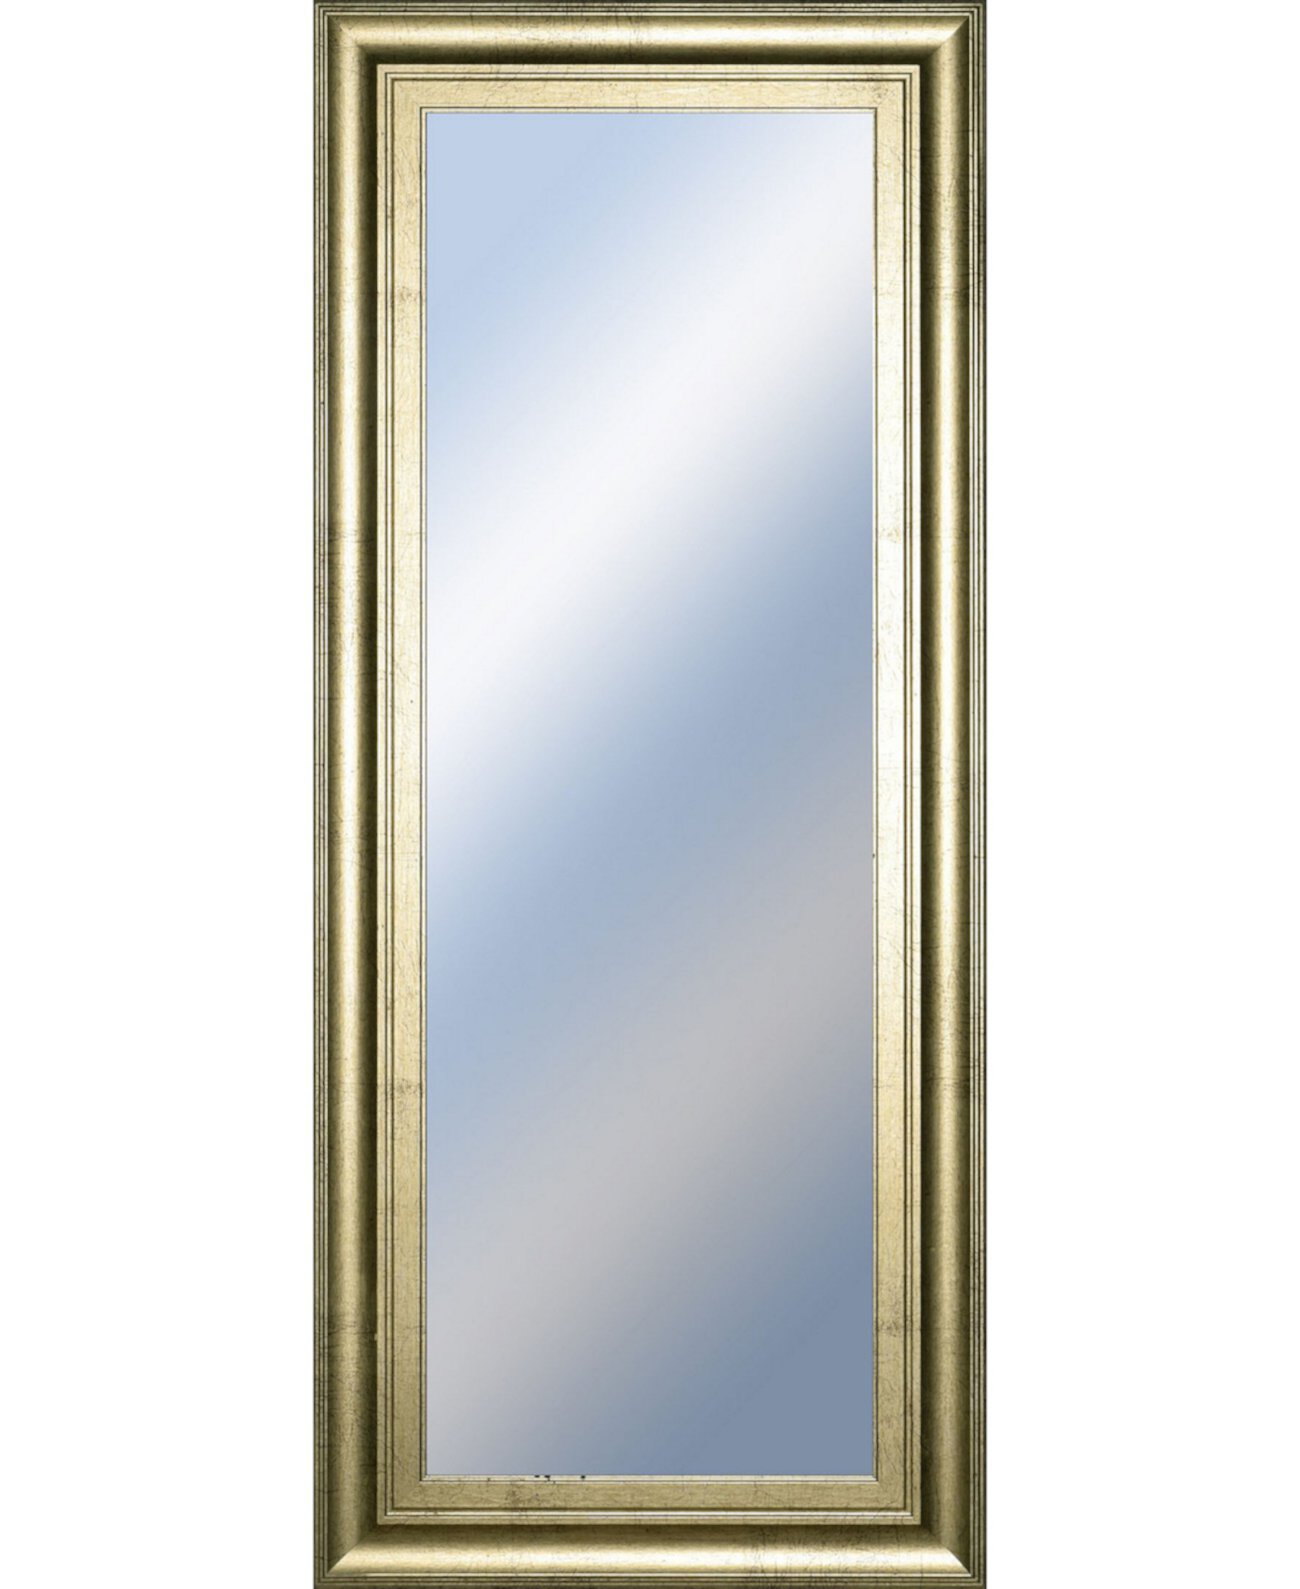 Настенное зеркало в декоративной рамке, 18 x 42 дюйма Classy Art